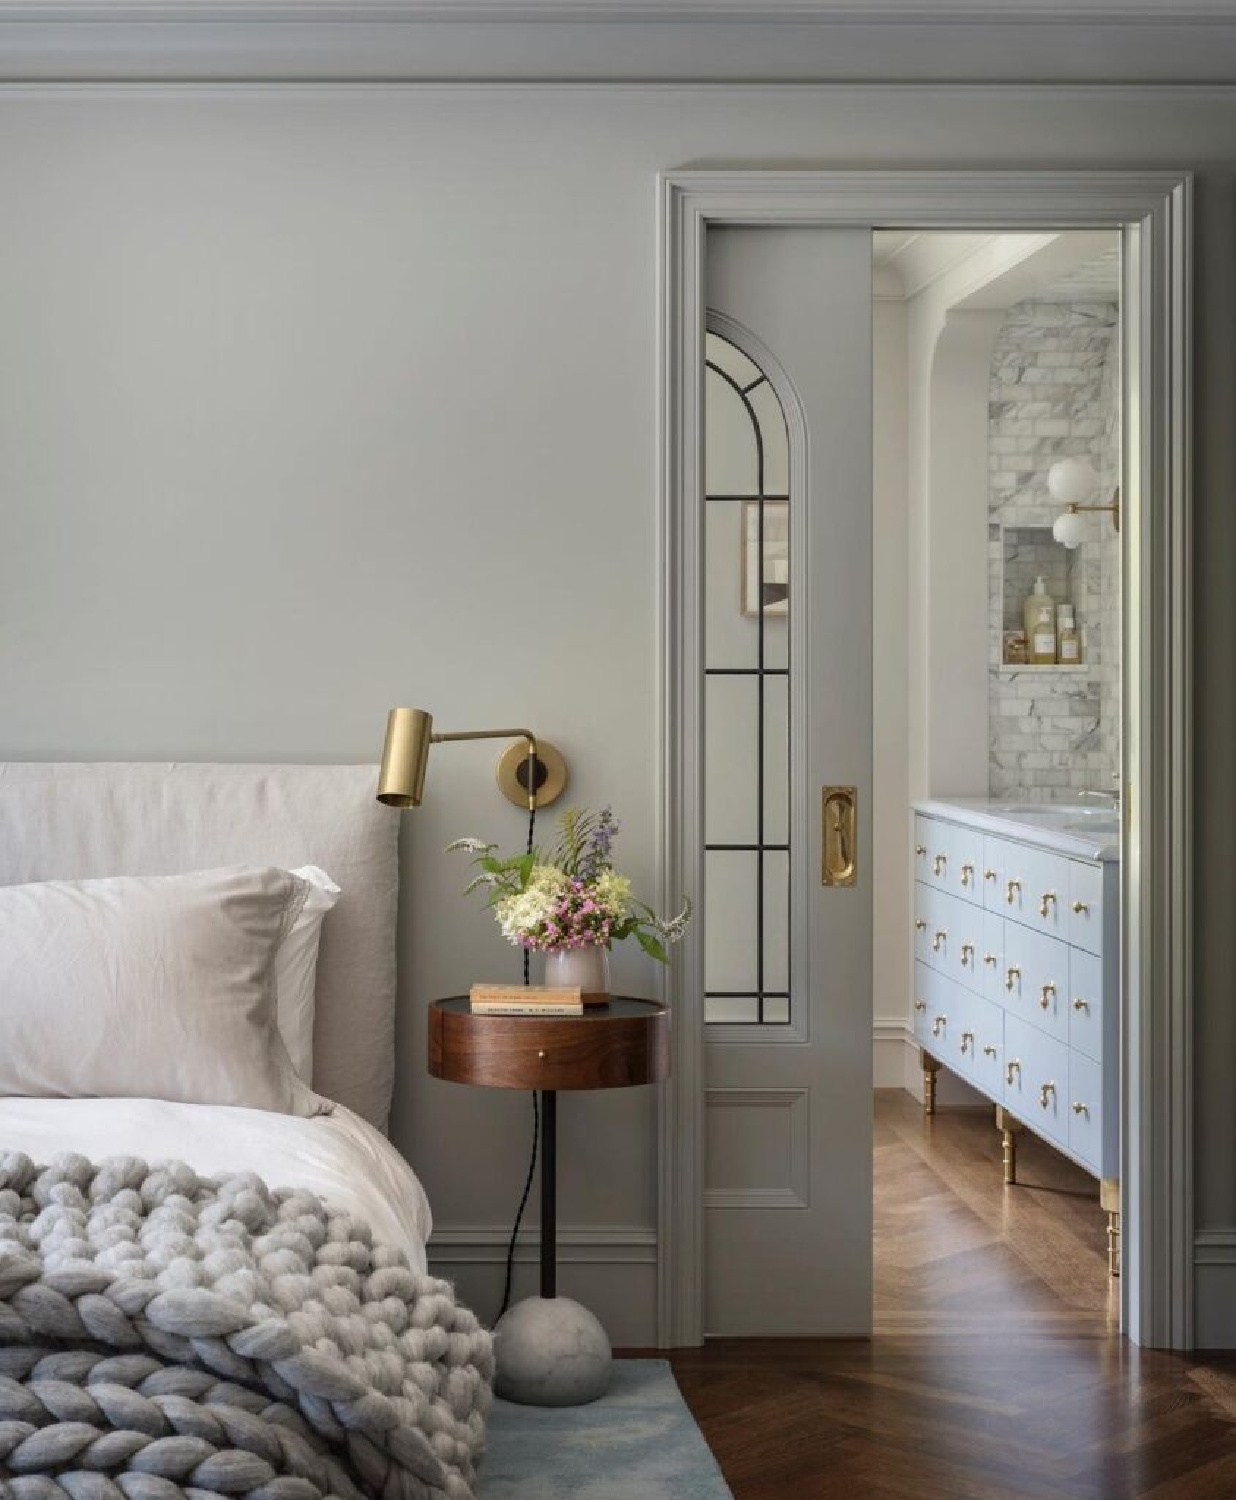 Jessica Helgerson designed cozy grey bedroom suite. #traditionalstyle #classicinteriors #luxuriousbedrooms